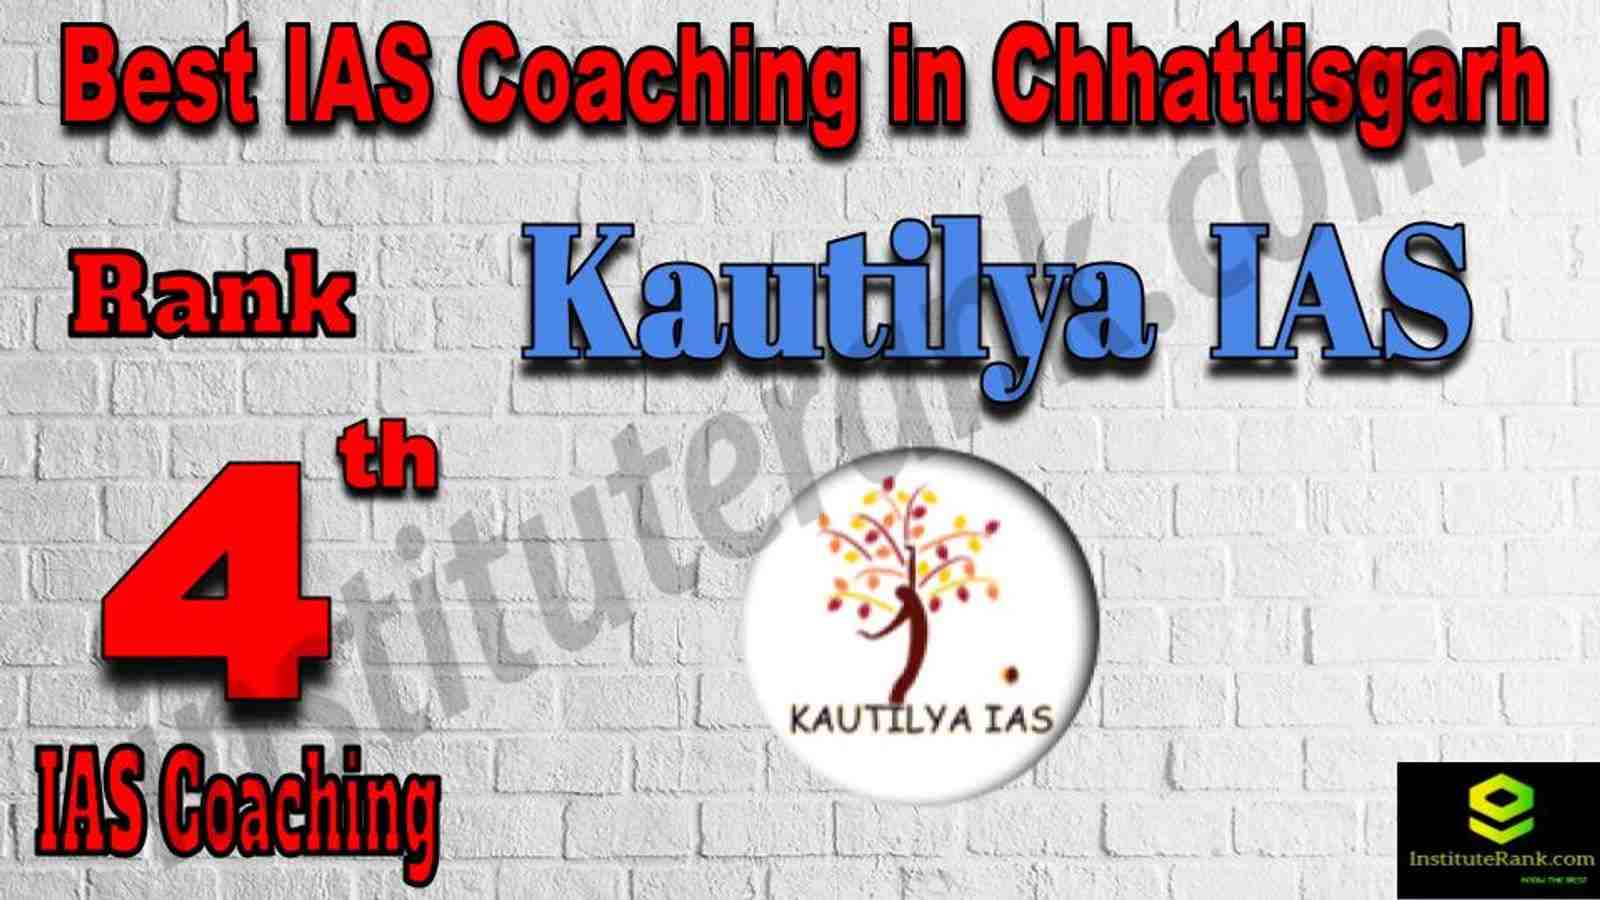 4th Best IAS Coaching in Chhattisgarh